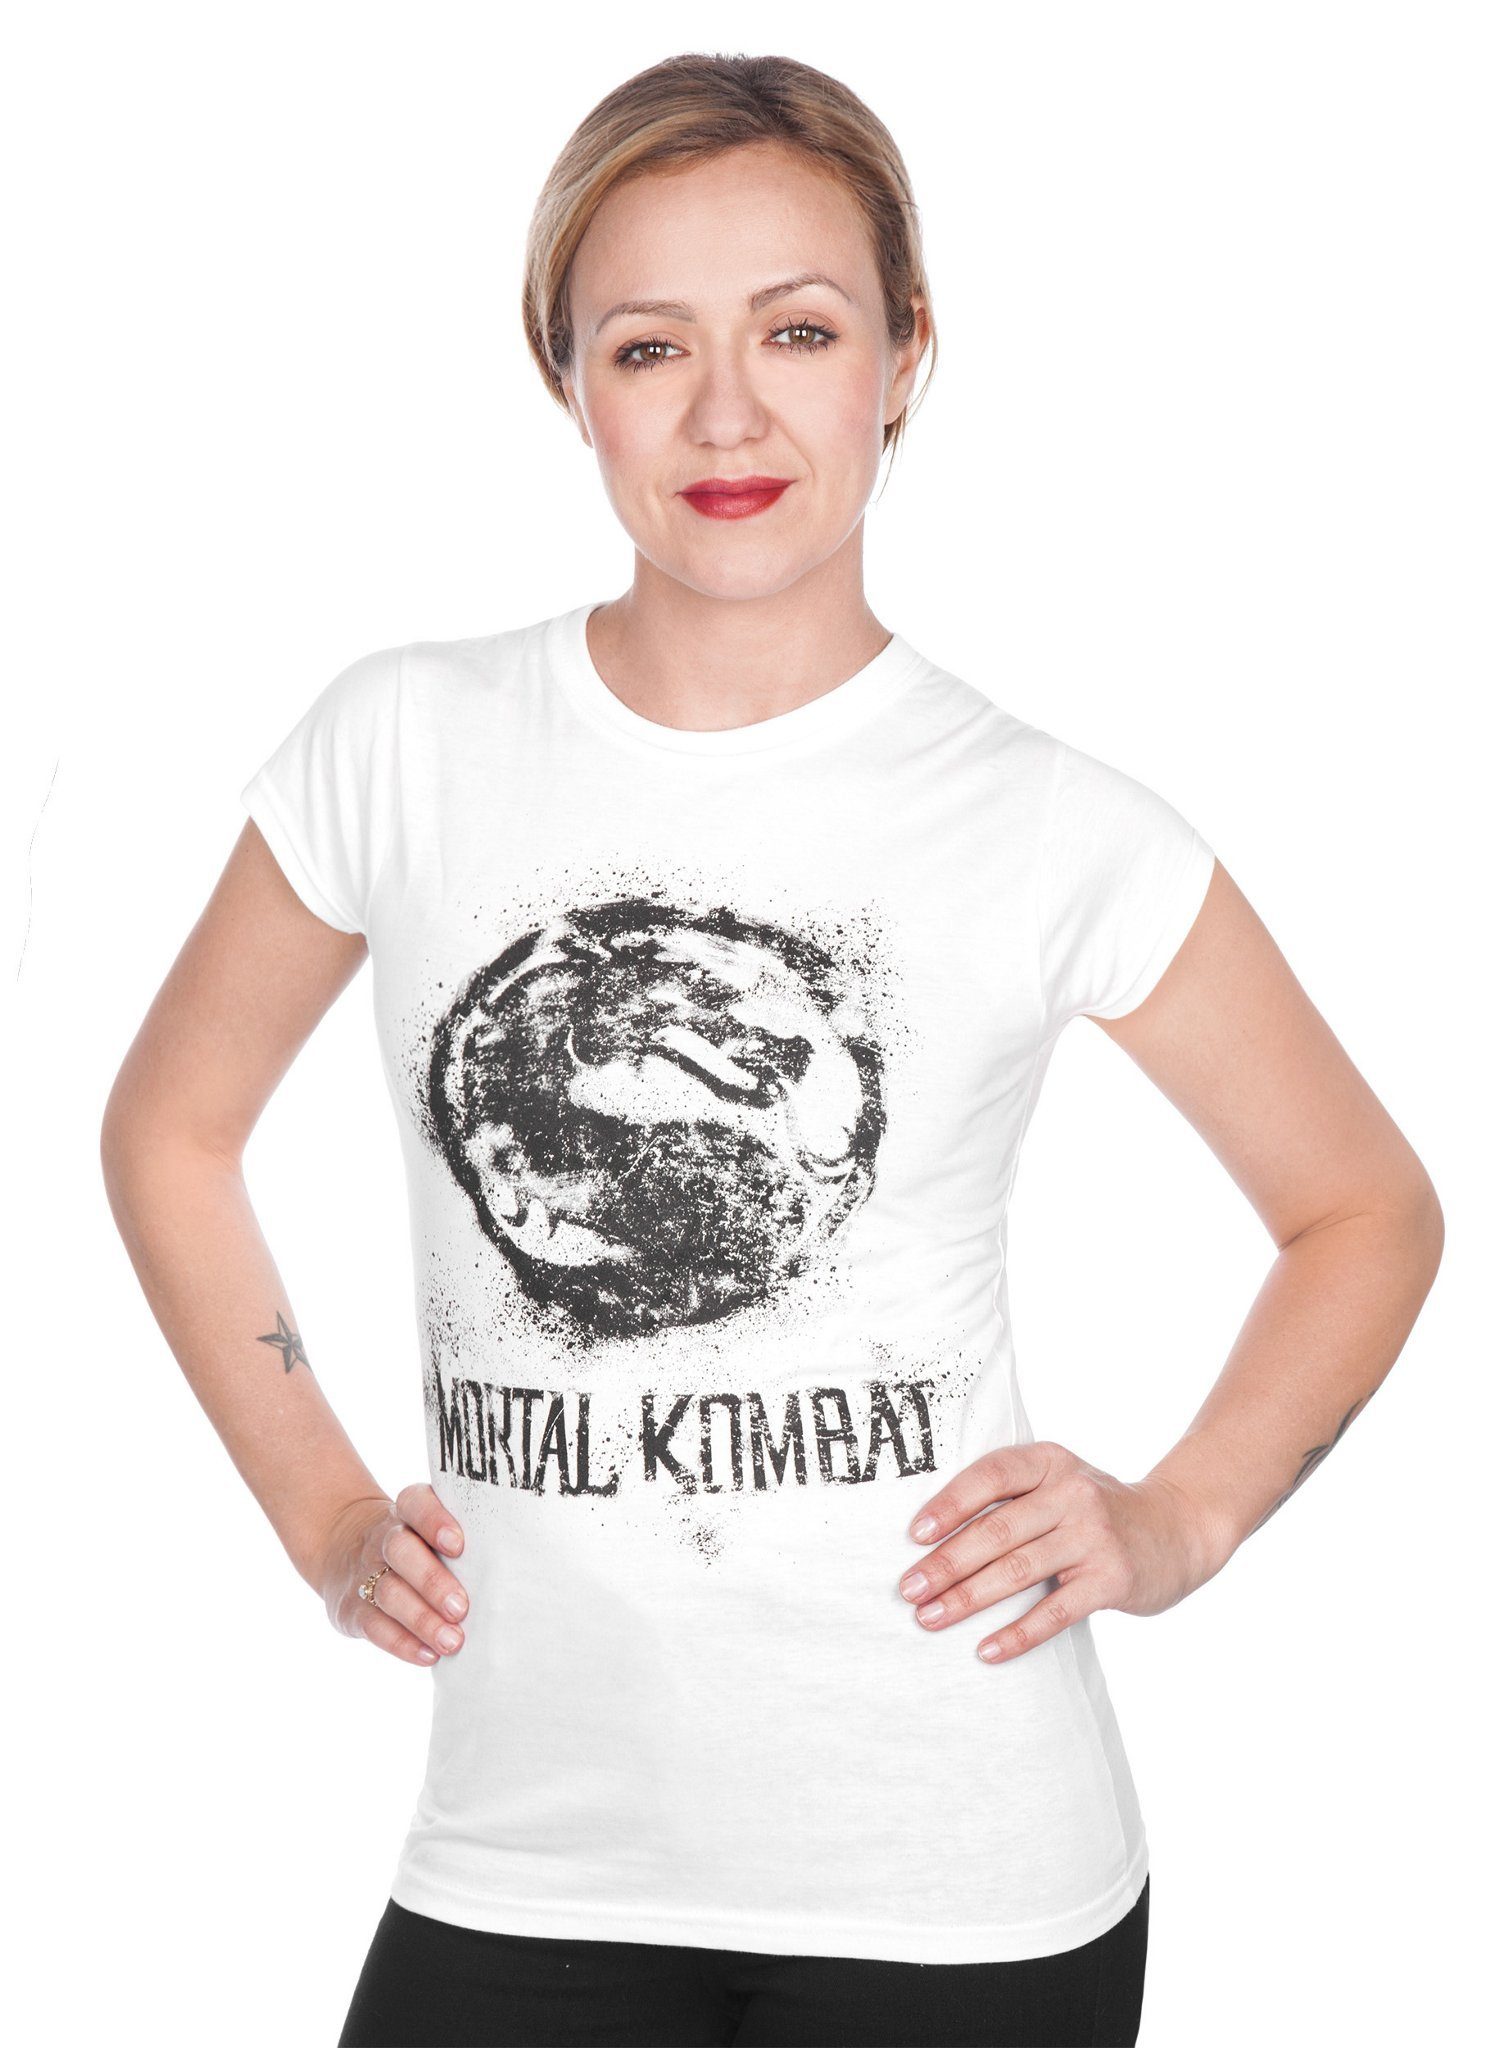 Metamorph T-Shirt Girlie Shirt Drache Das Mortal Kombat Girlie Shirt ist ein cooles Hemd für Gamer und leid